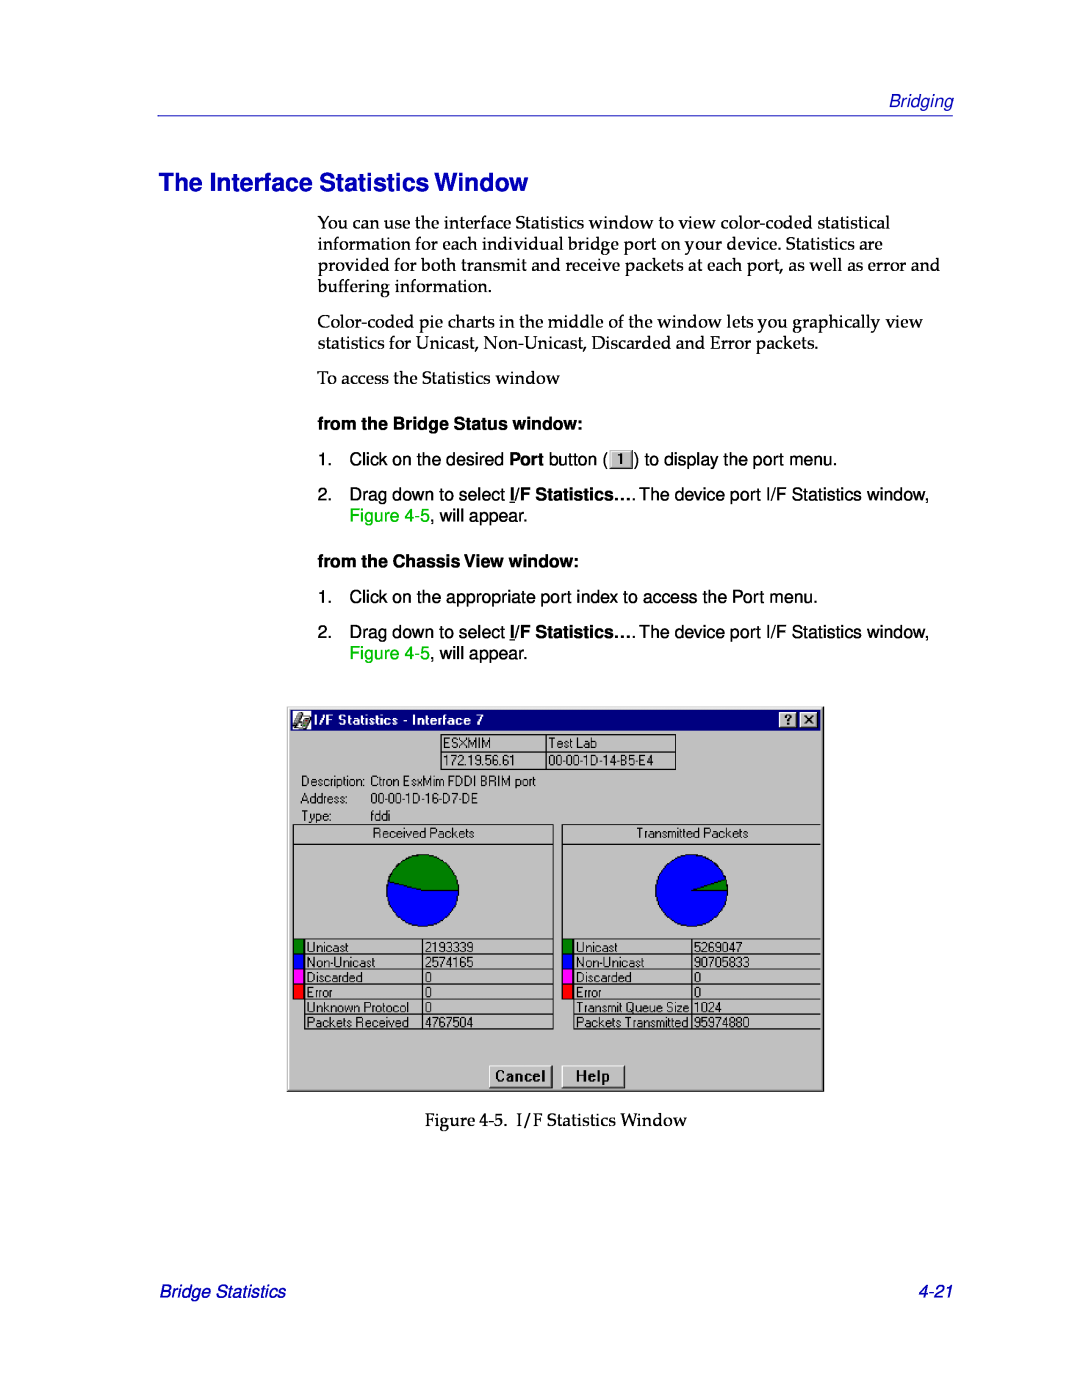 Cabletron Systems CSX200 The Interface Statistics Window, 4-21, Bridging, from the Bridge Status window, Bridge Statistics 